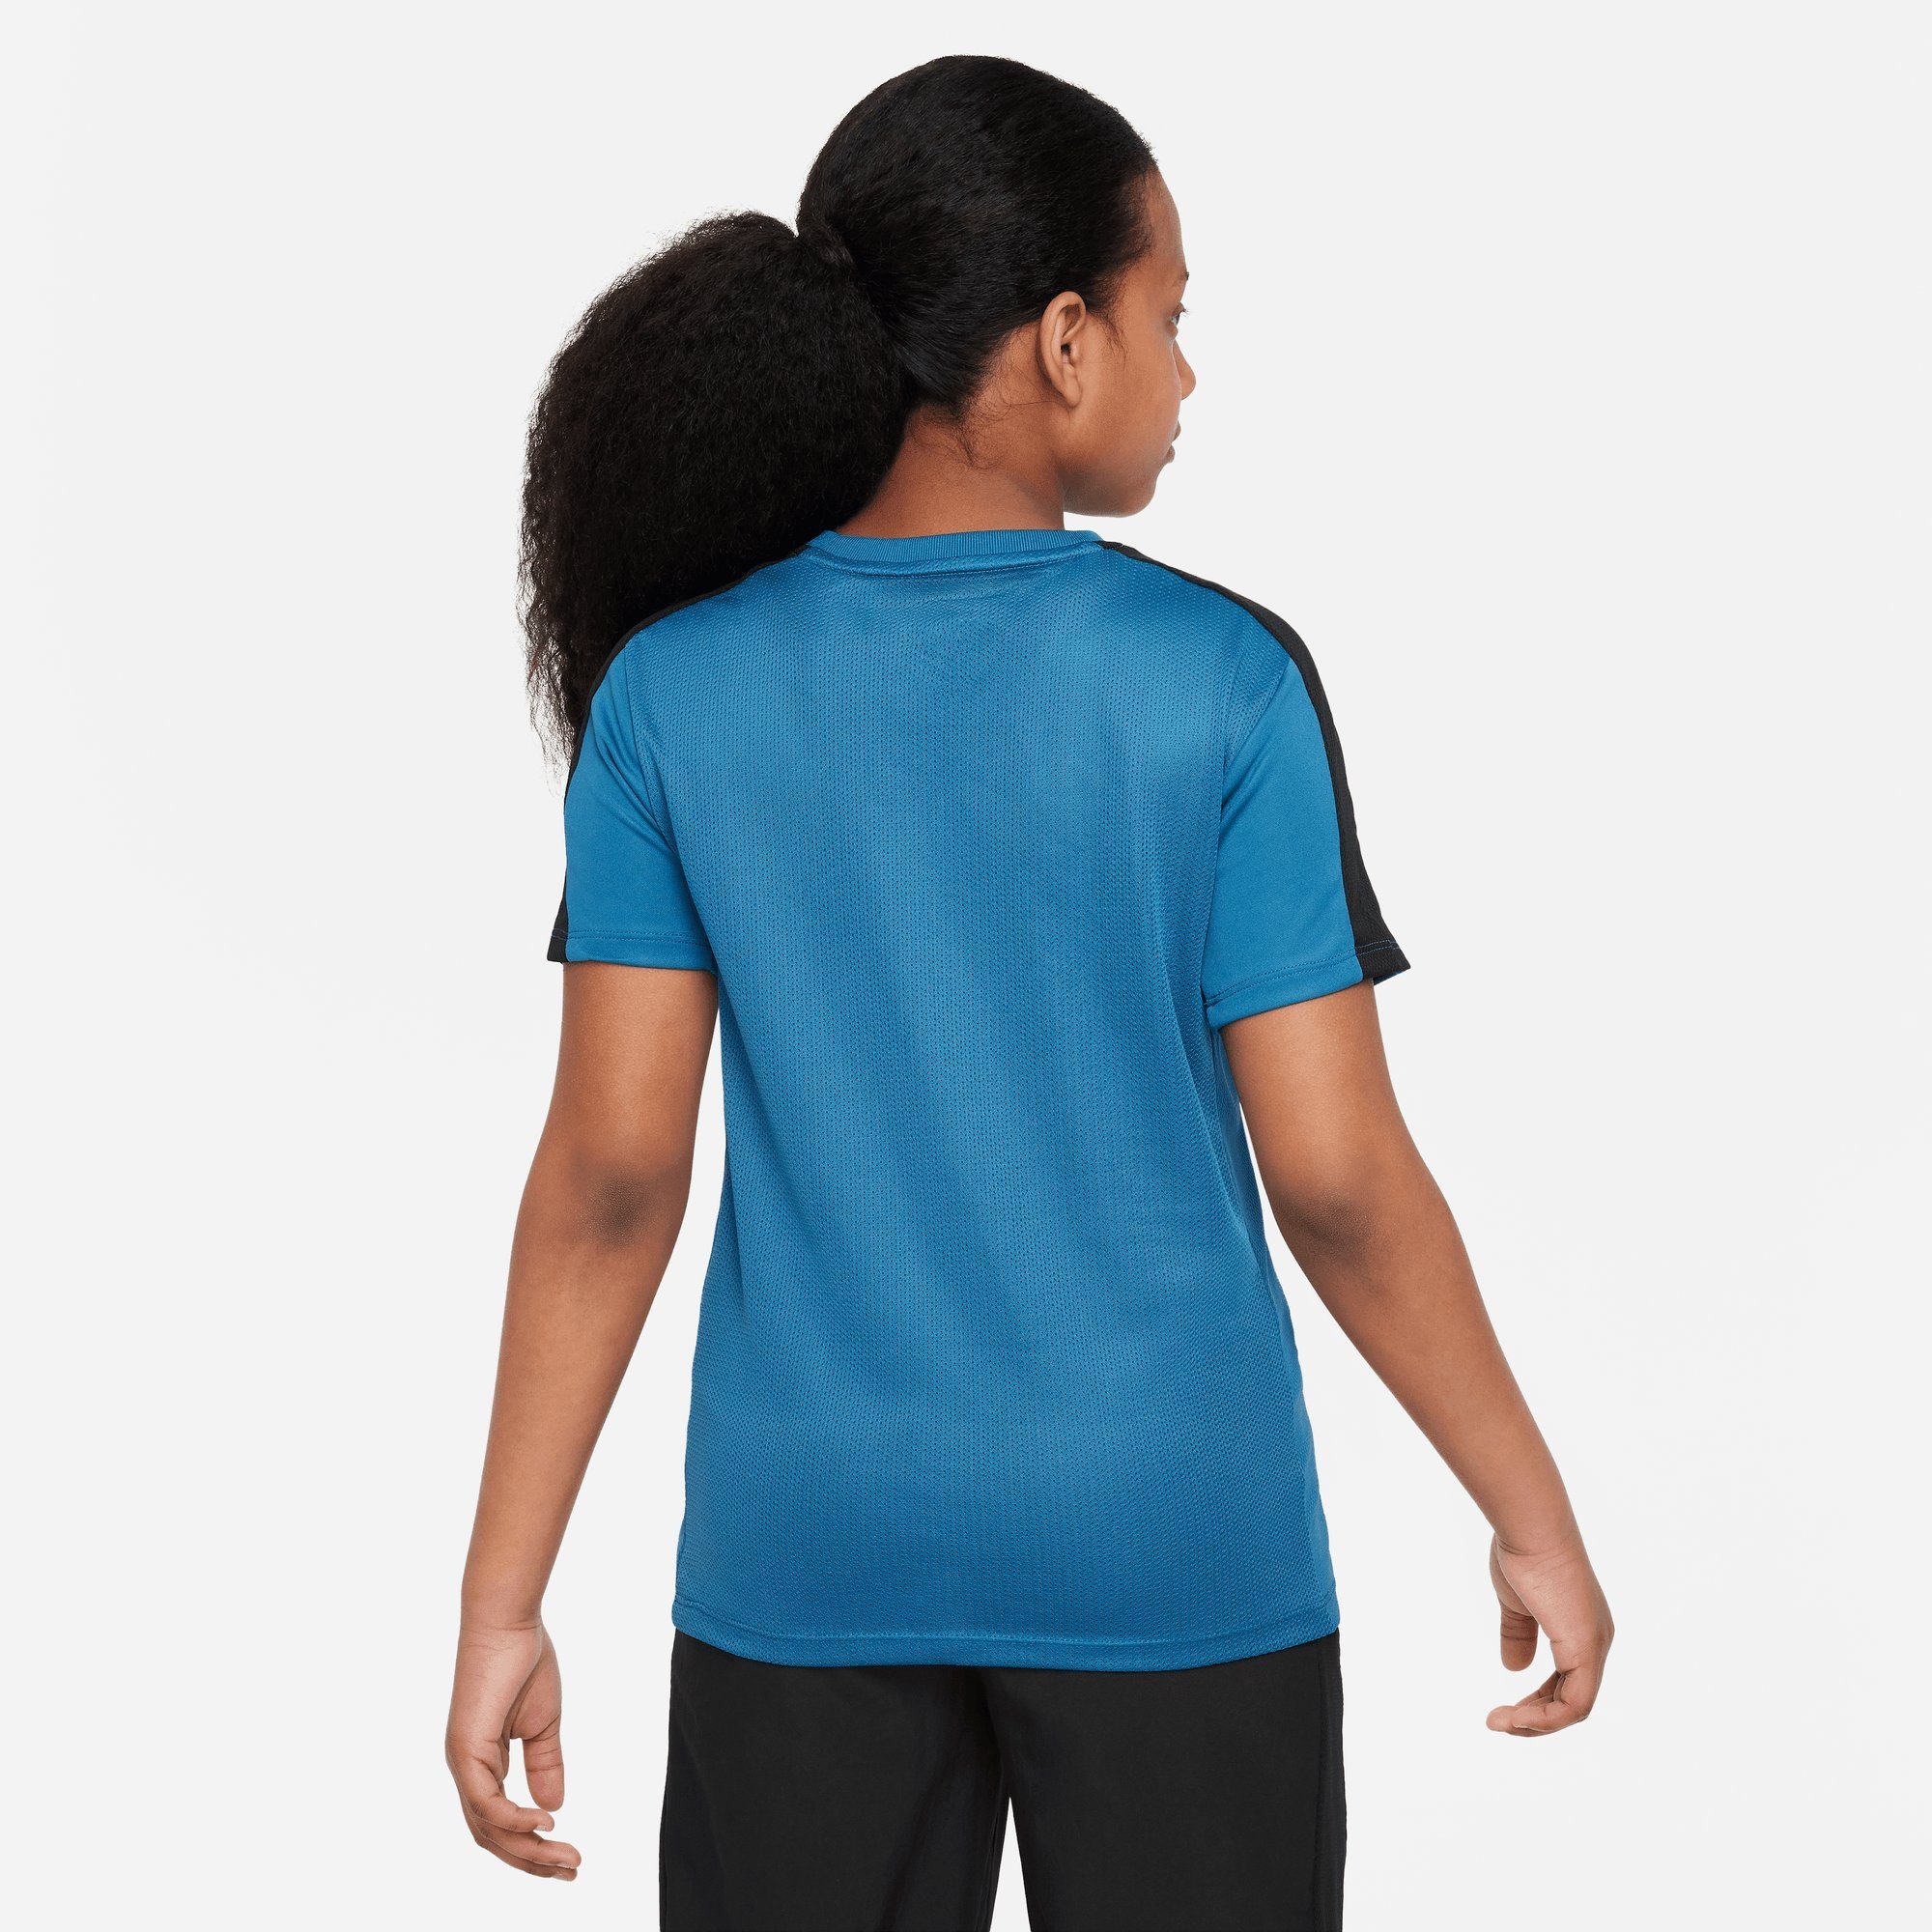 TOP KIDS' Nike Trainingsshirt DRI-FIT INDUSTRIAL ACADEMY BLUE/BLACK/BLACK